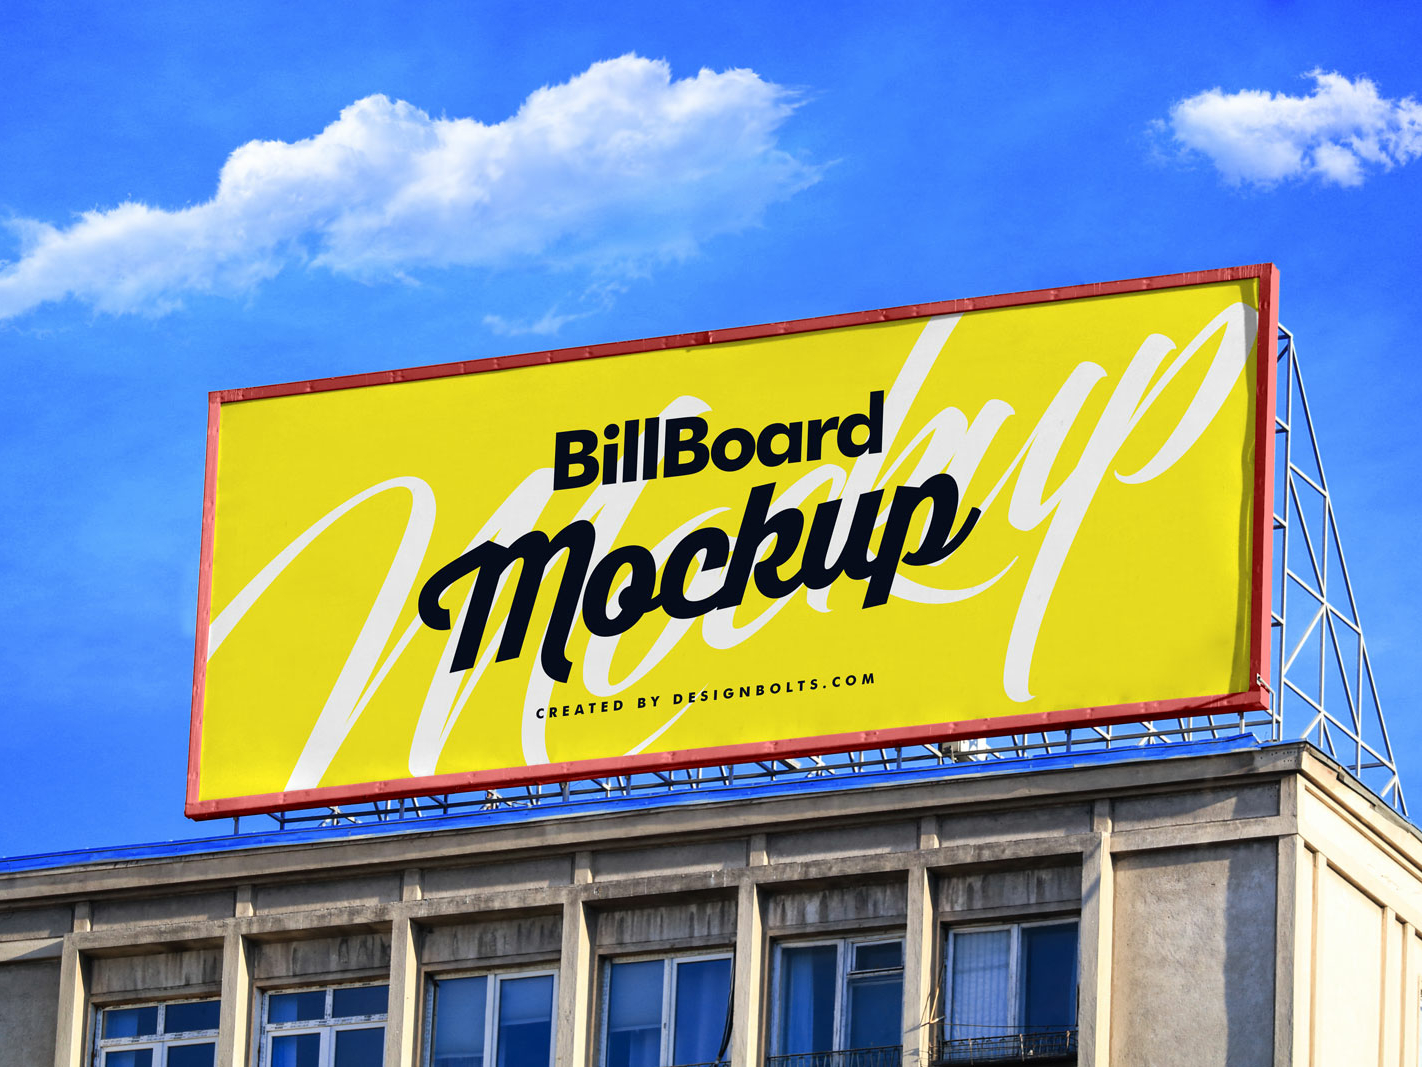 Download Free Billboard On Building Mockup PSD by Zee Que | Designbolts on Dribbble